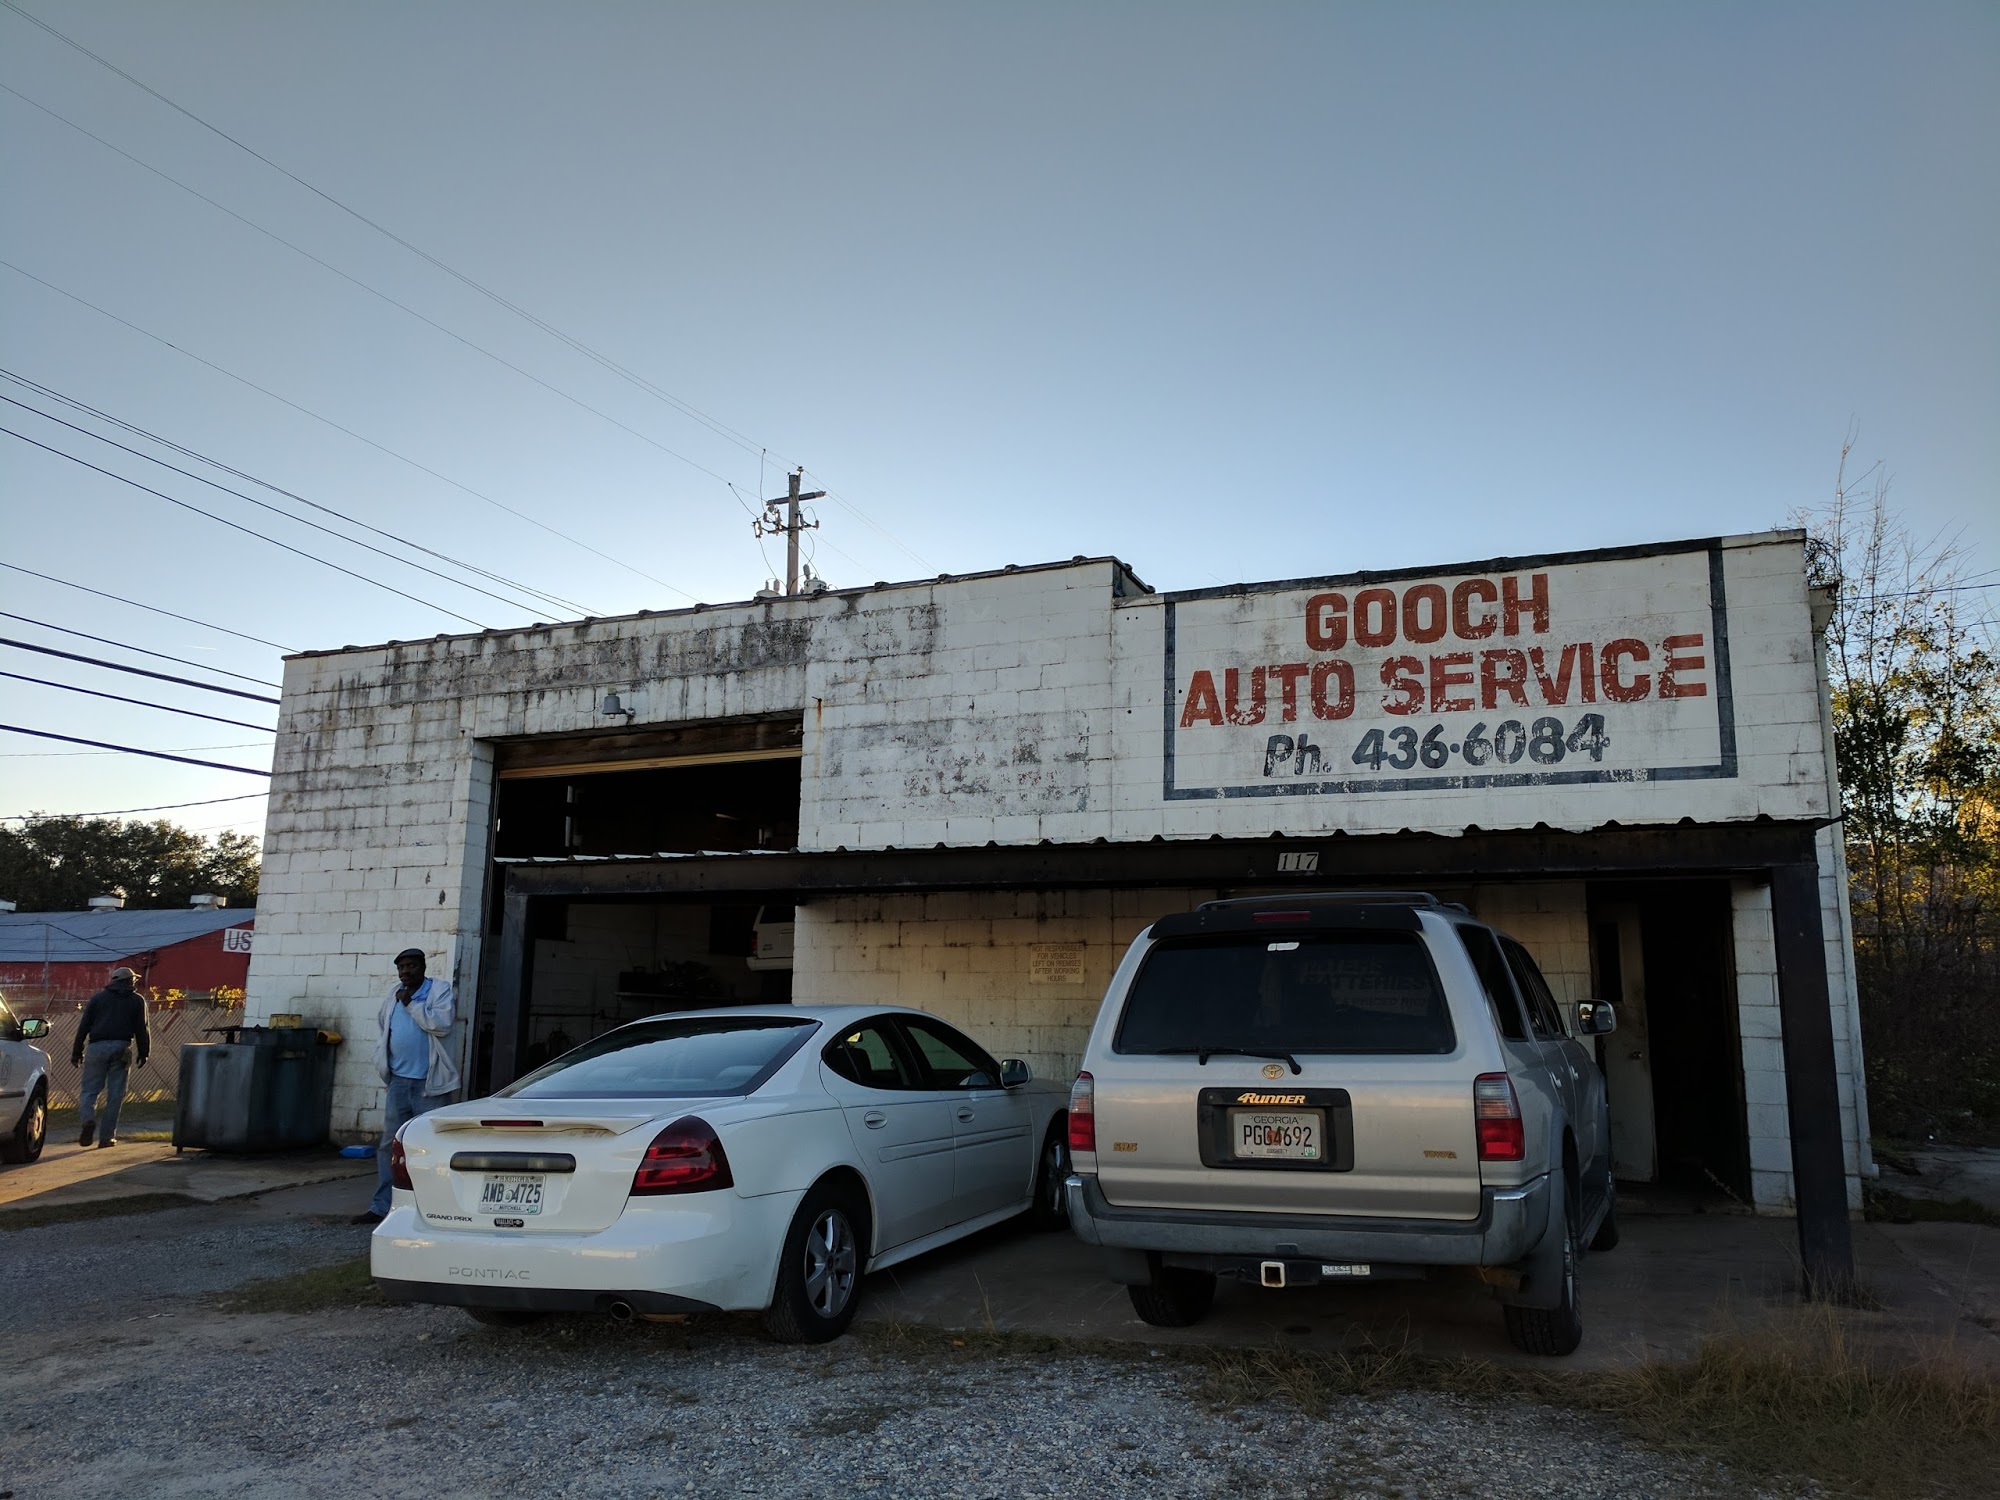 Gooch Auto Services